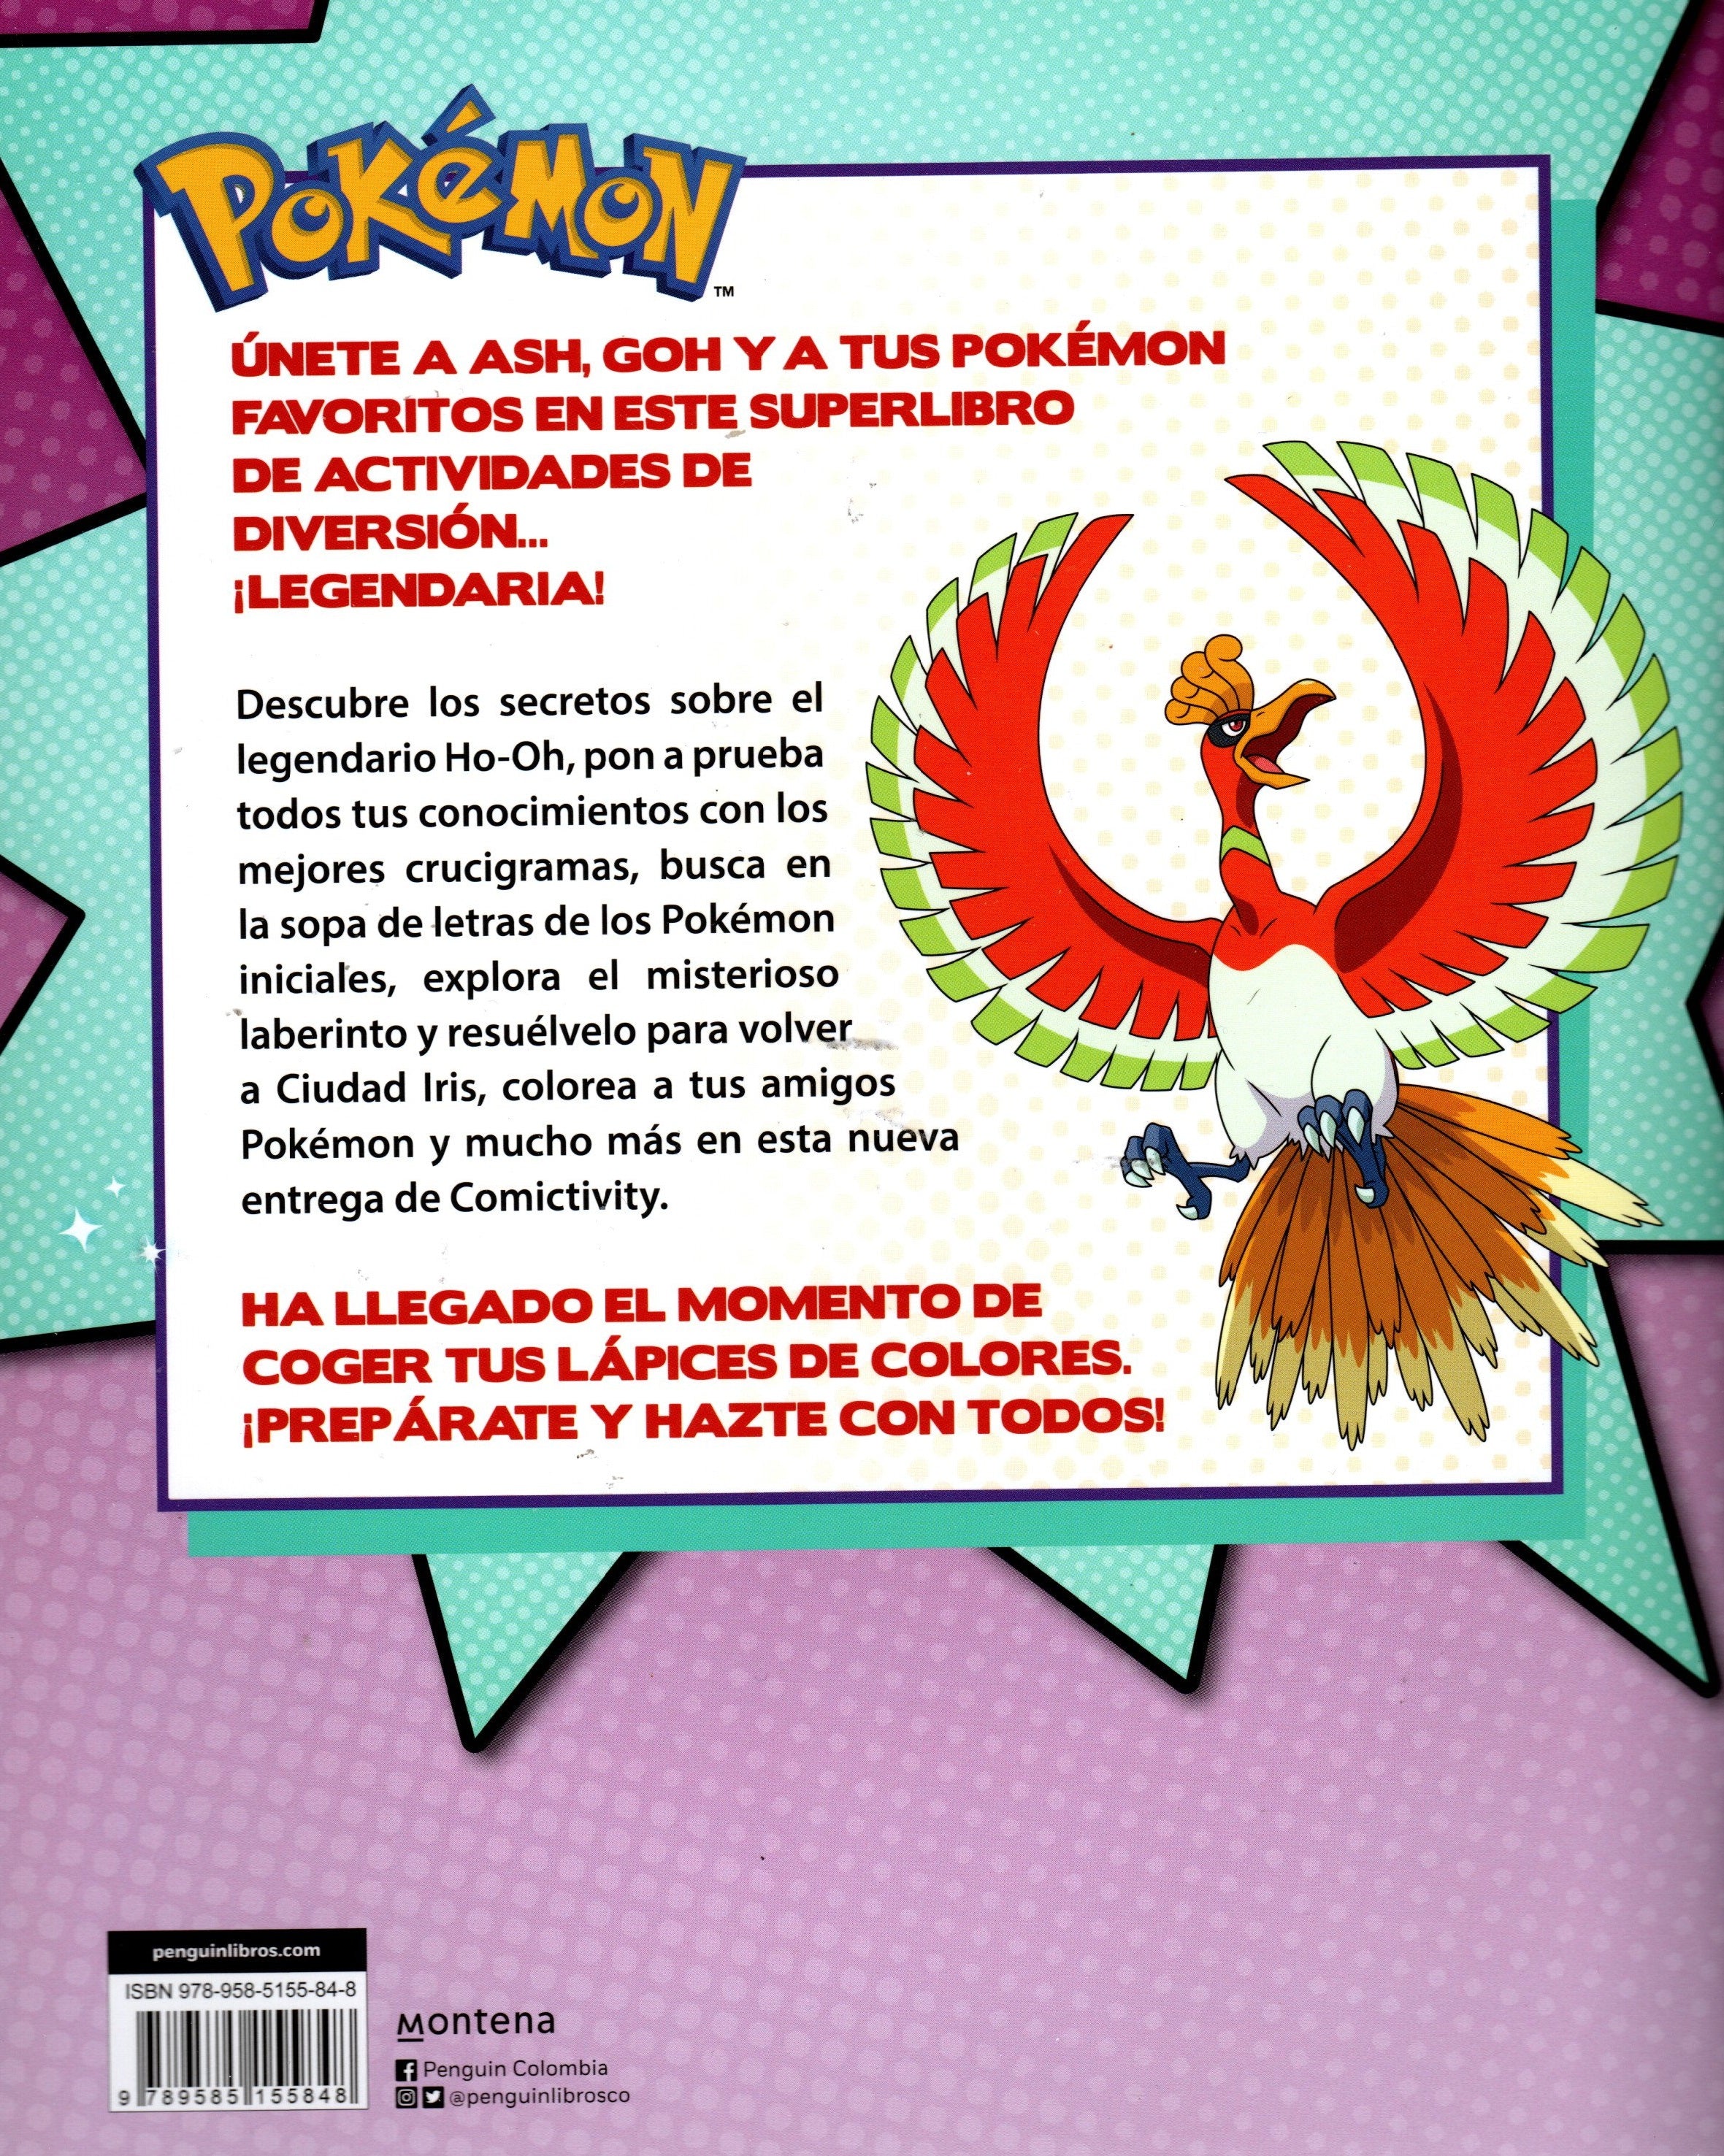 Libro The Pokémon Company - Pokemon Comictivity